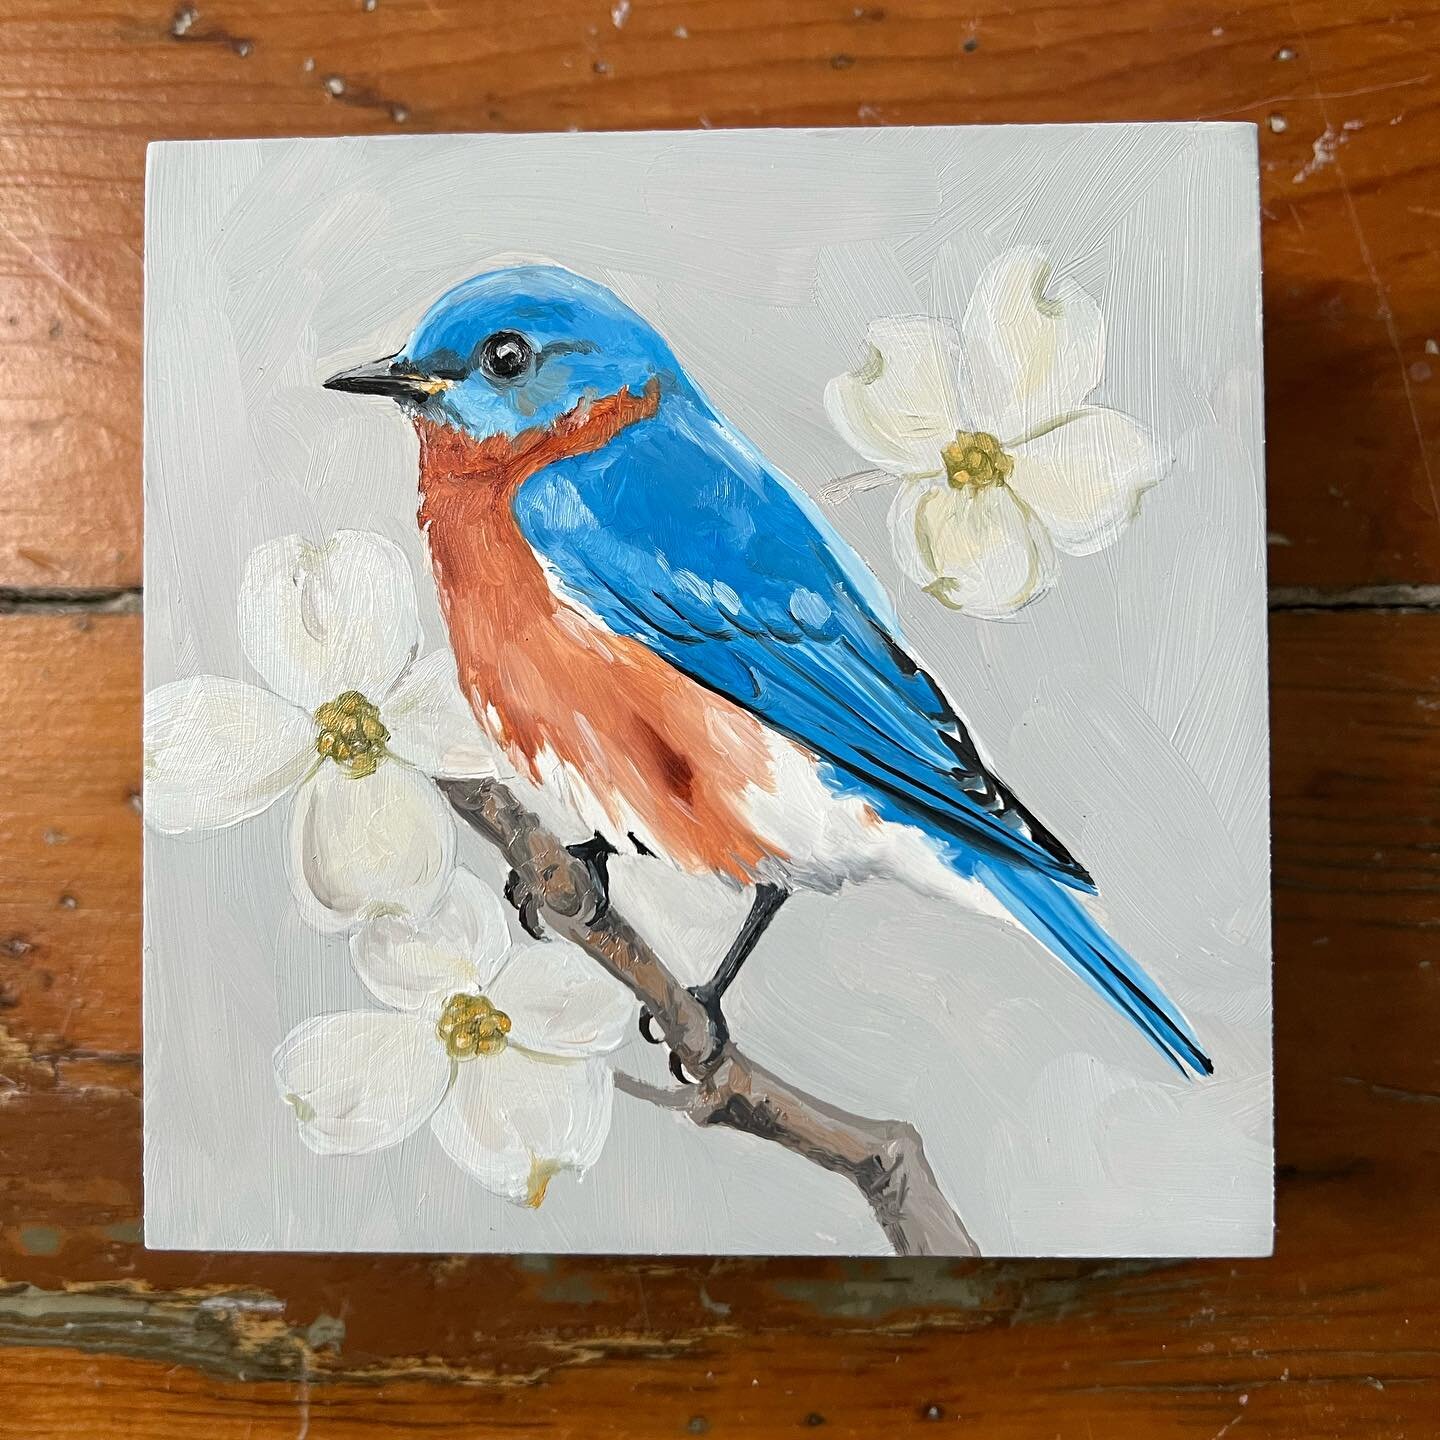 A couple of blue birds to start the week. 
Which one do you like?
@amanda.dwyer.art voted for blue bird.
Oil on cradled wood.
#paintingoftheday #bluebird #bluebirdpainting #birdlover #oilpainter #nature #birdsinnature